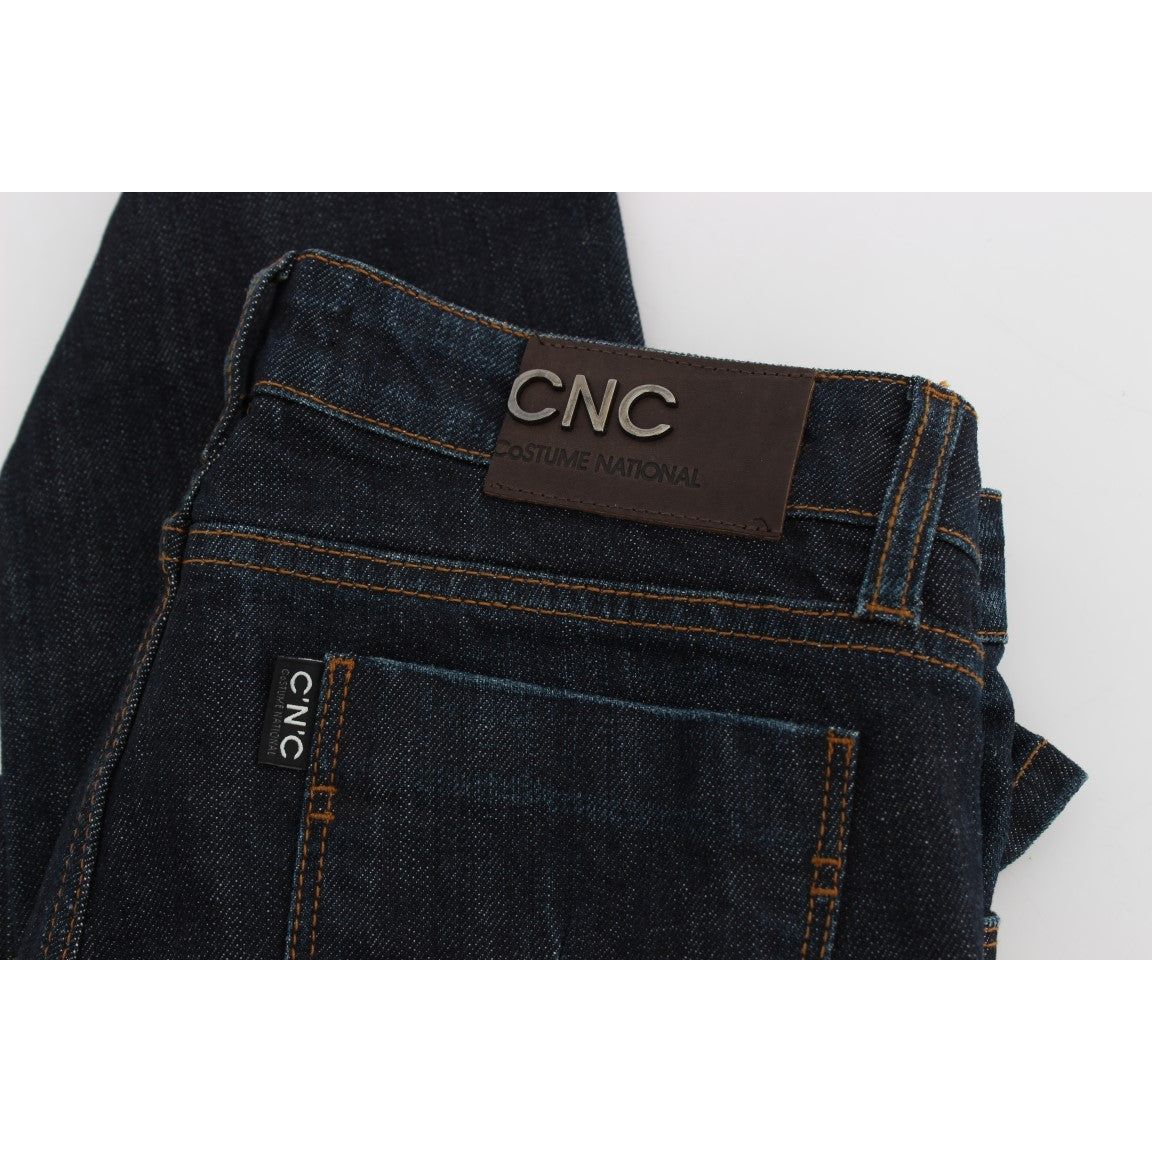 Costume National Chic Slim Fit Skinny Designer Jeans blue-cotton-stretch-slim-fit-jeans-2 179786-blue-cotton-stretch-slim-fit-jeans-5-7.jpg